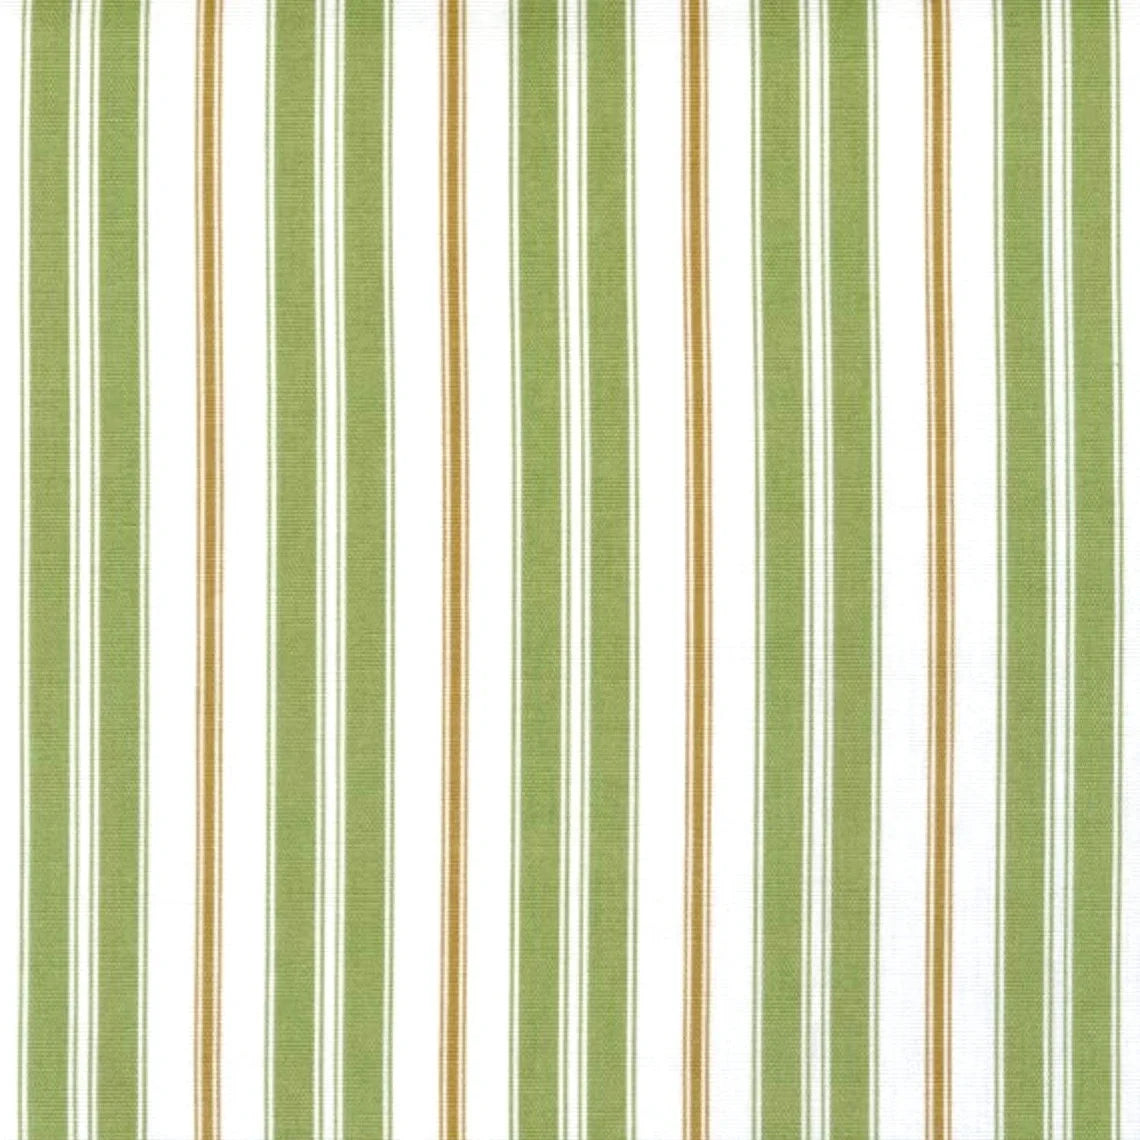 tailored valance in newbury aloe green stripe- green, brown, white